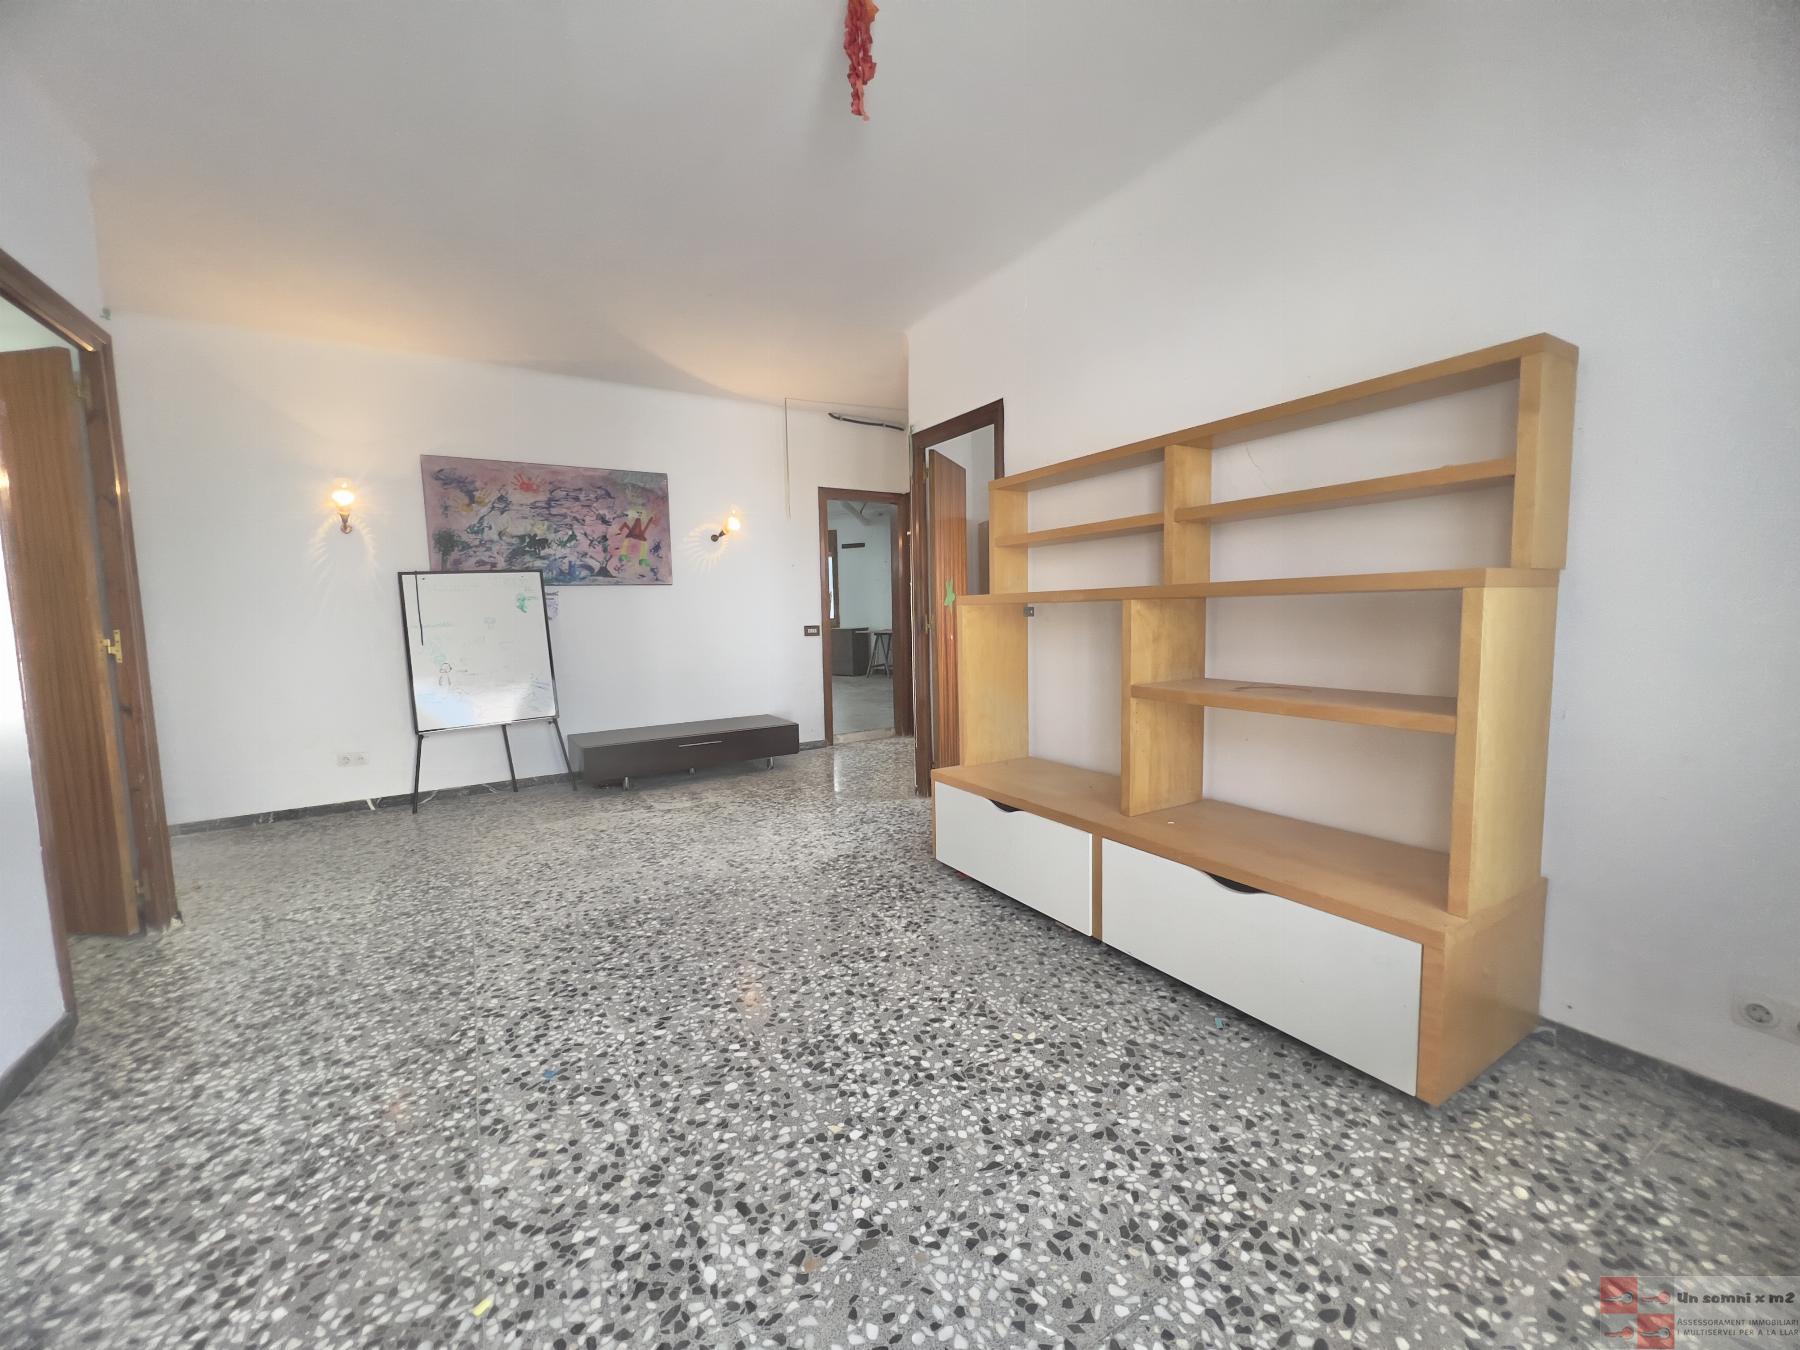 For sale of house in Sant Llorenç d Hortons